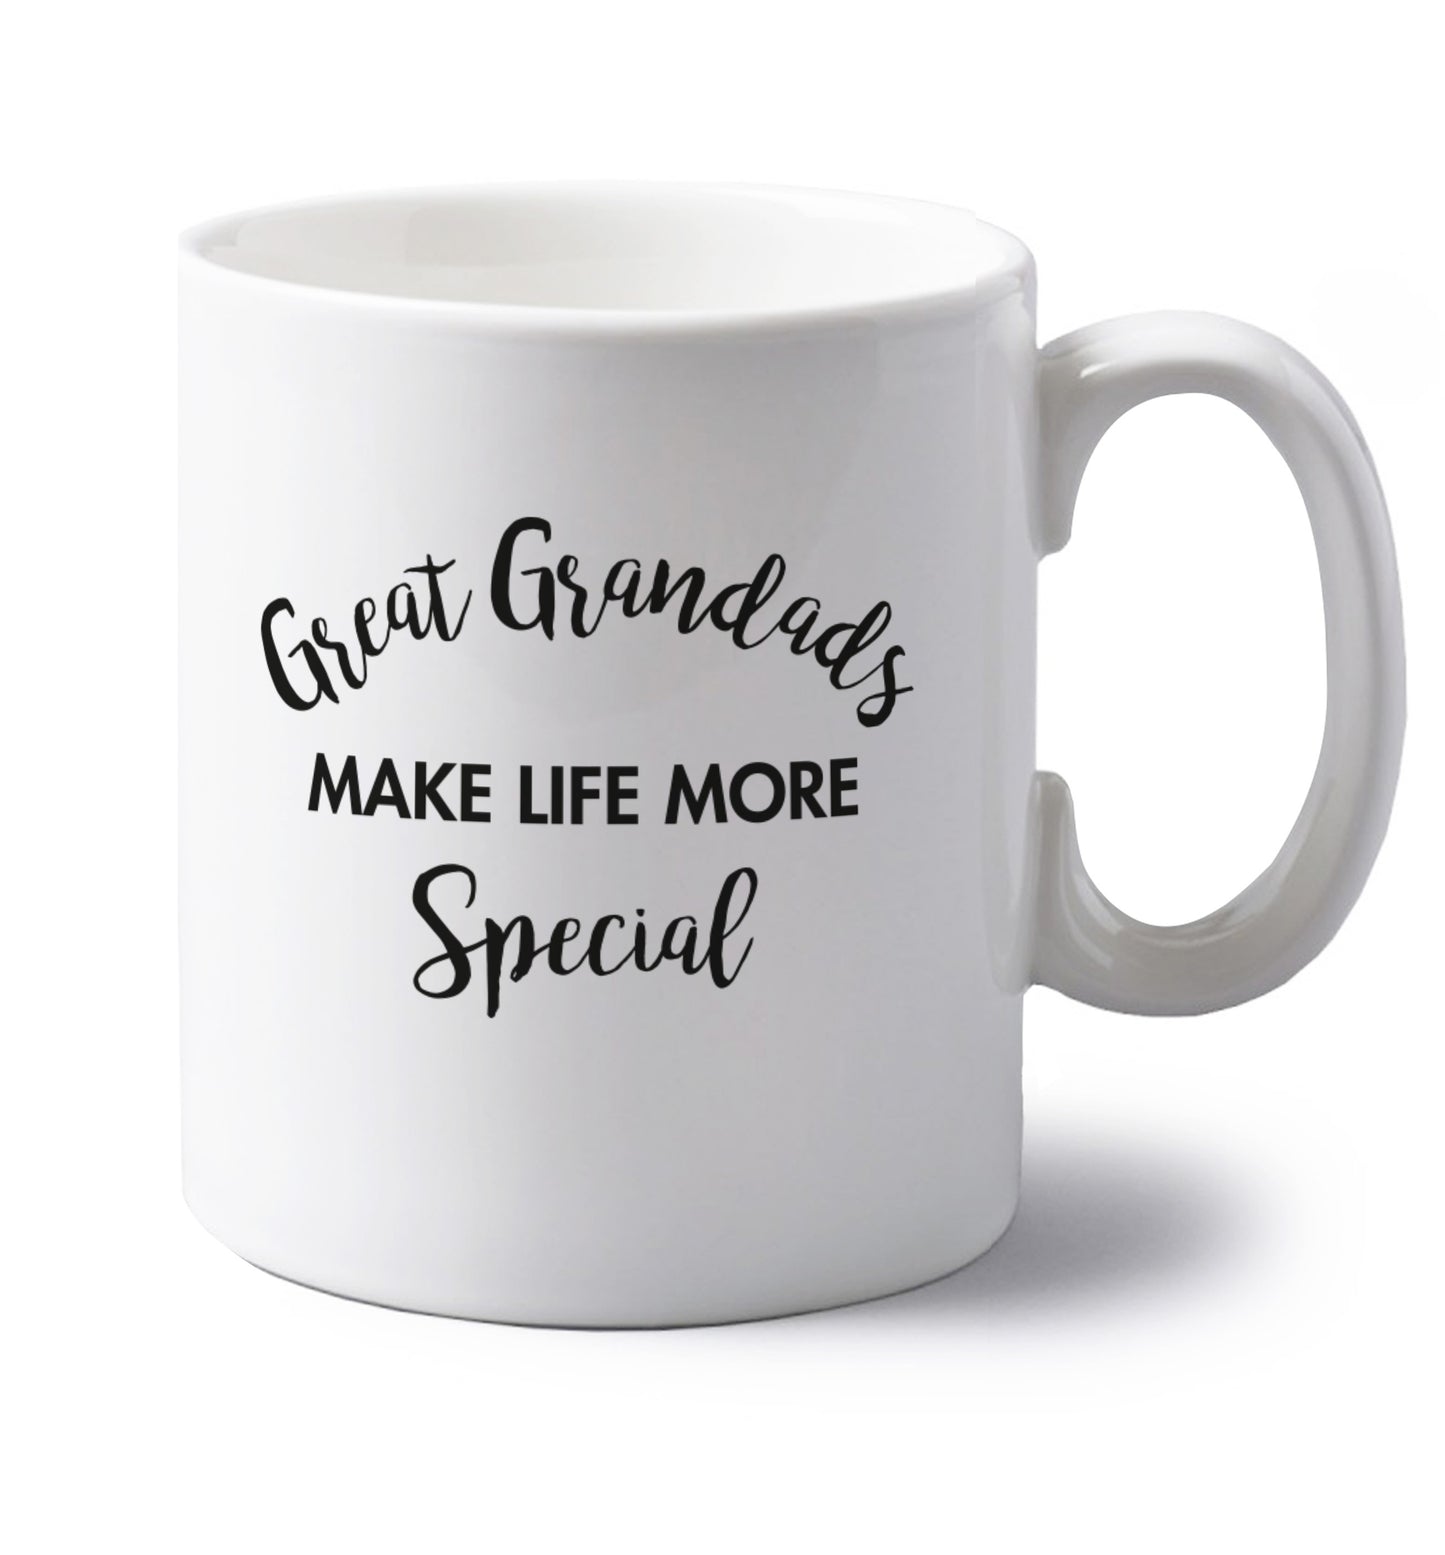 Great Grandads make life more special left handed white ceramic mug 